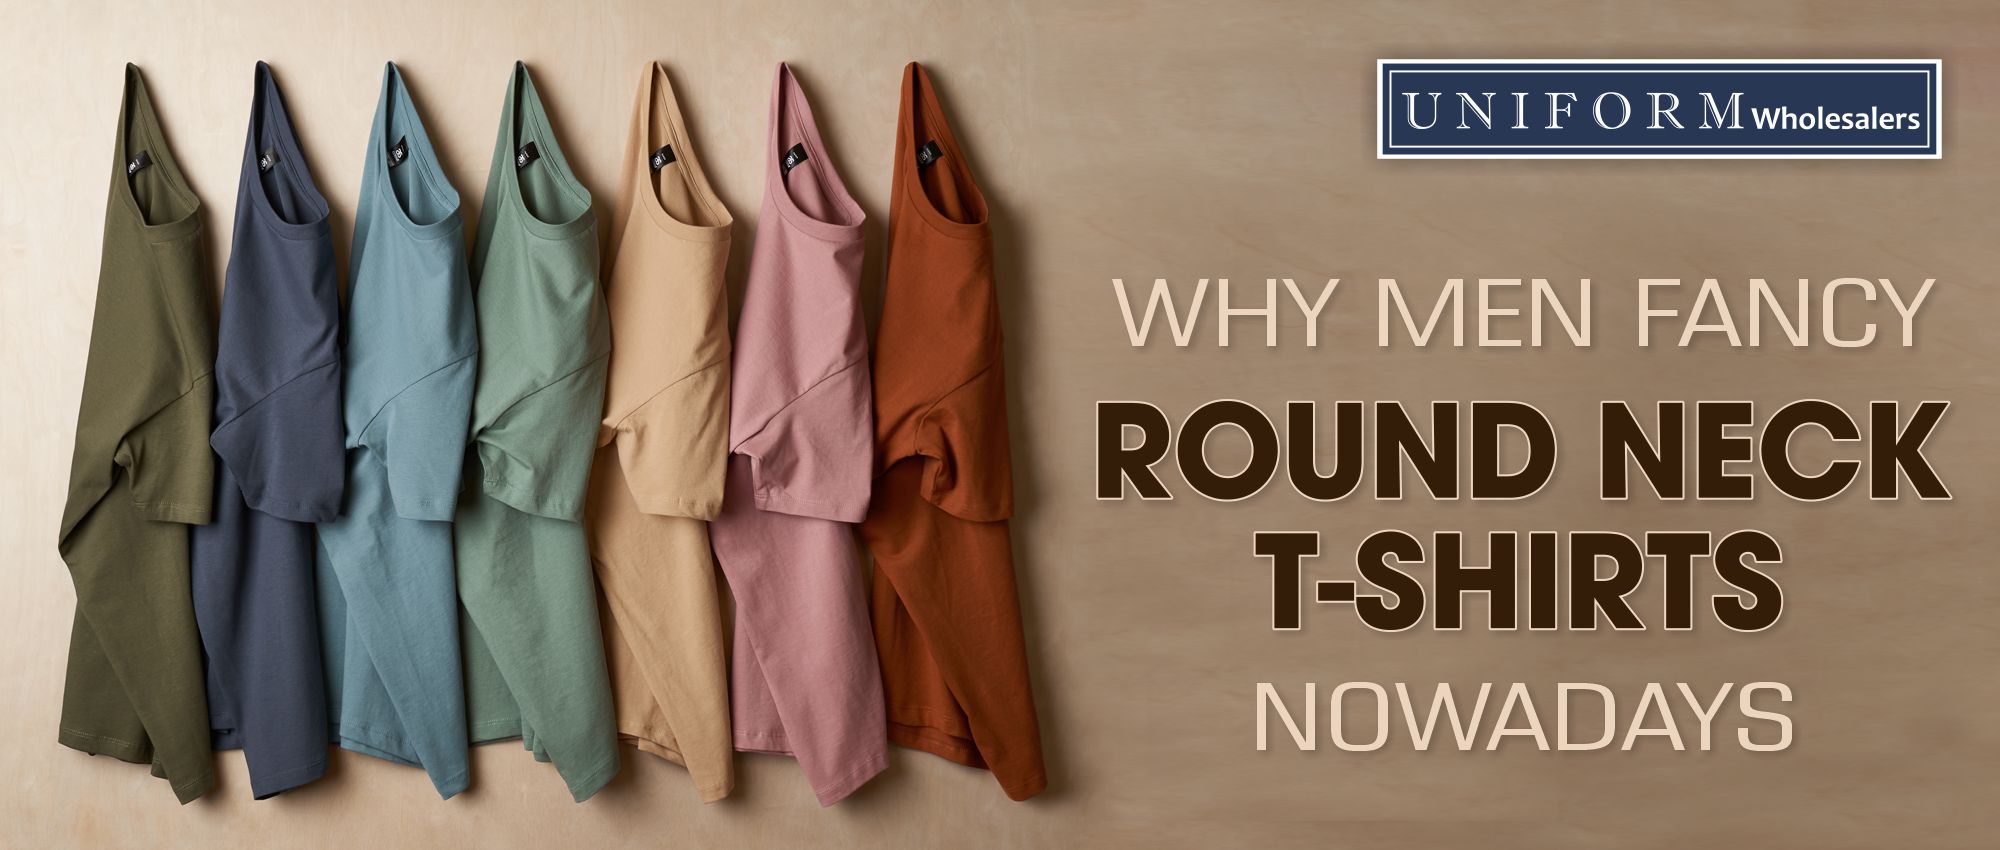 WHY MEN FANCY ROUND NECK T-SHIRTS NOWADAYS – Uniform Wholesalers